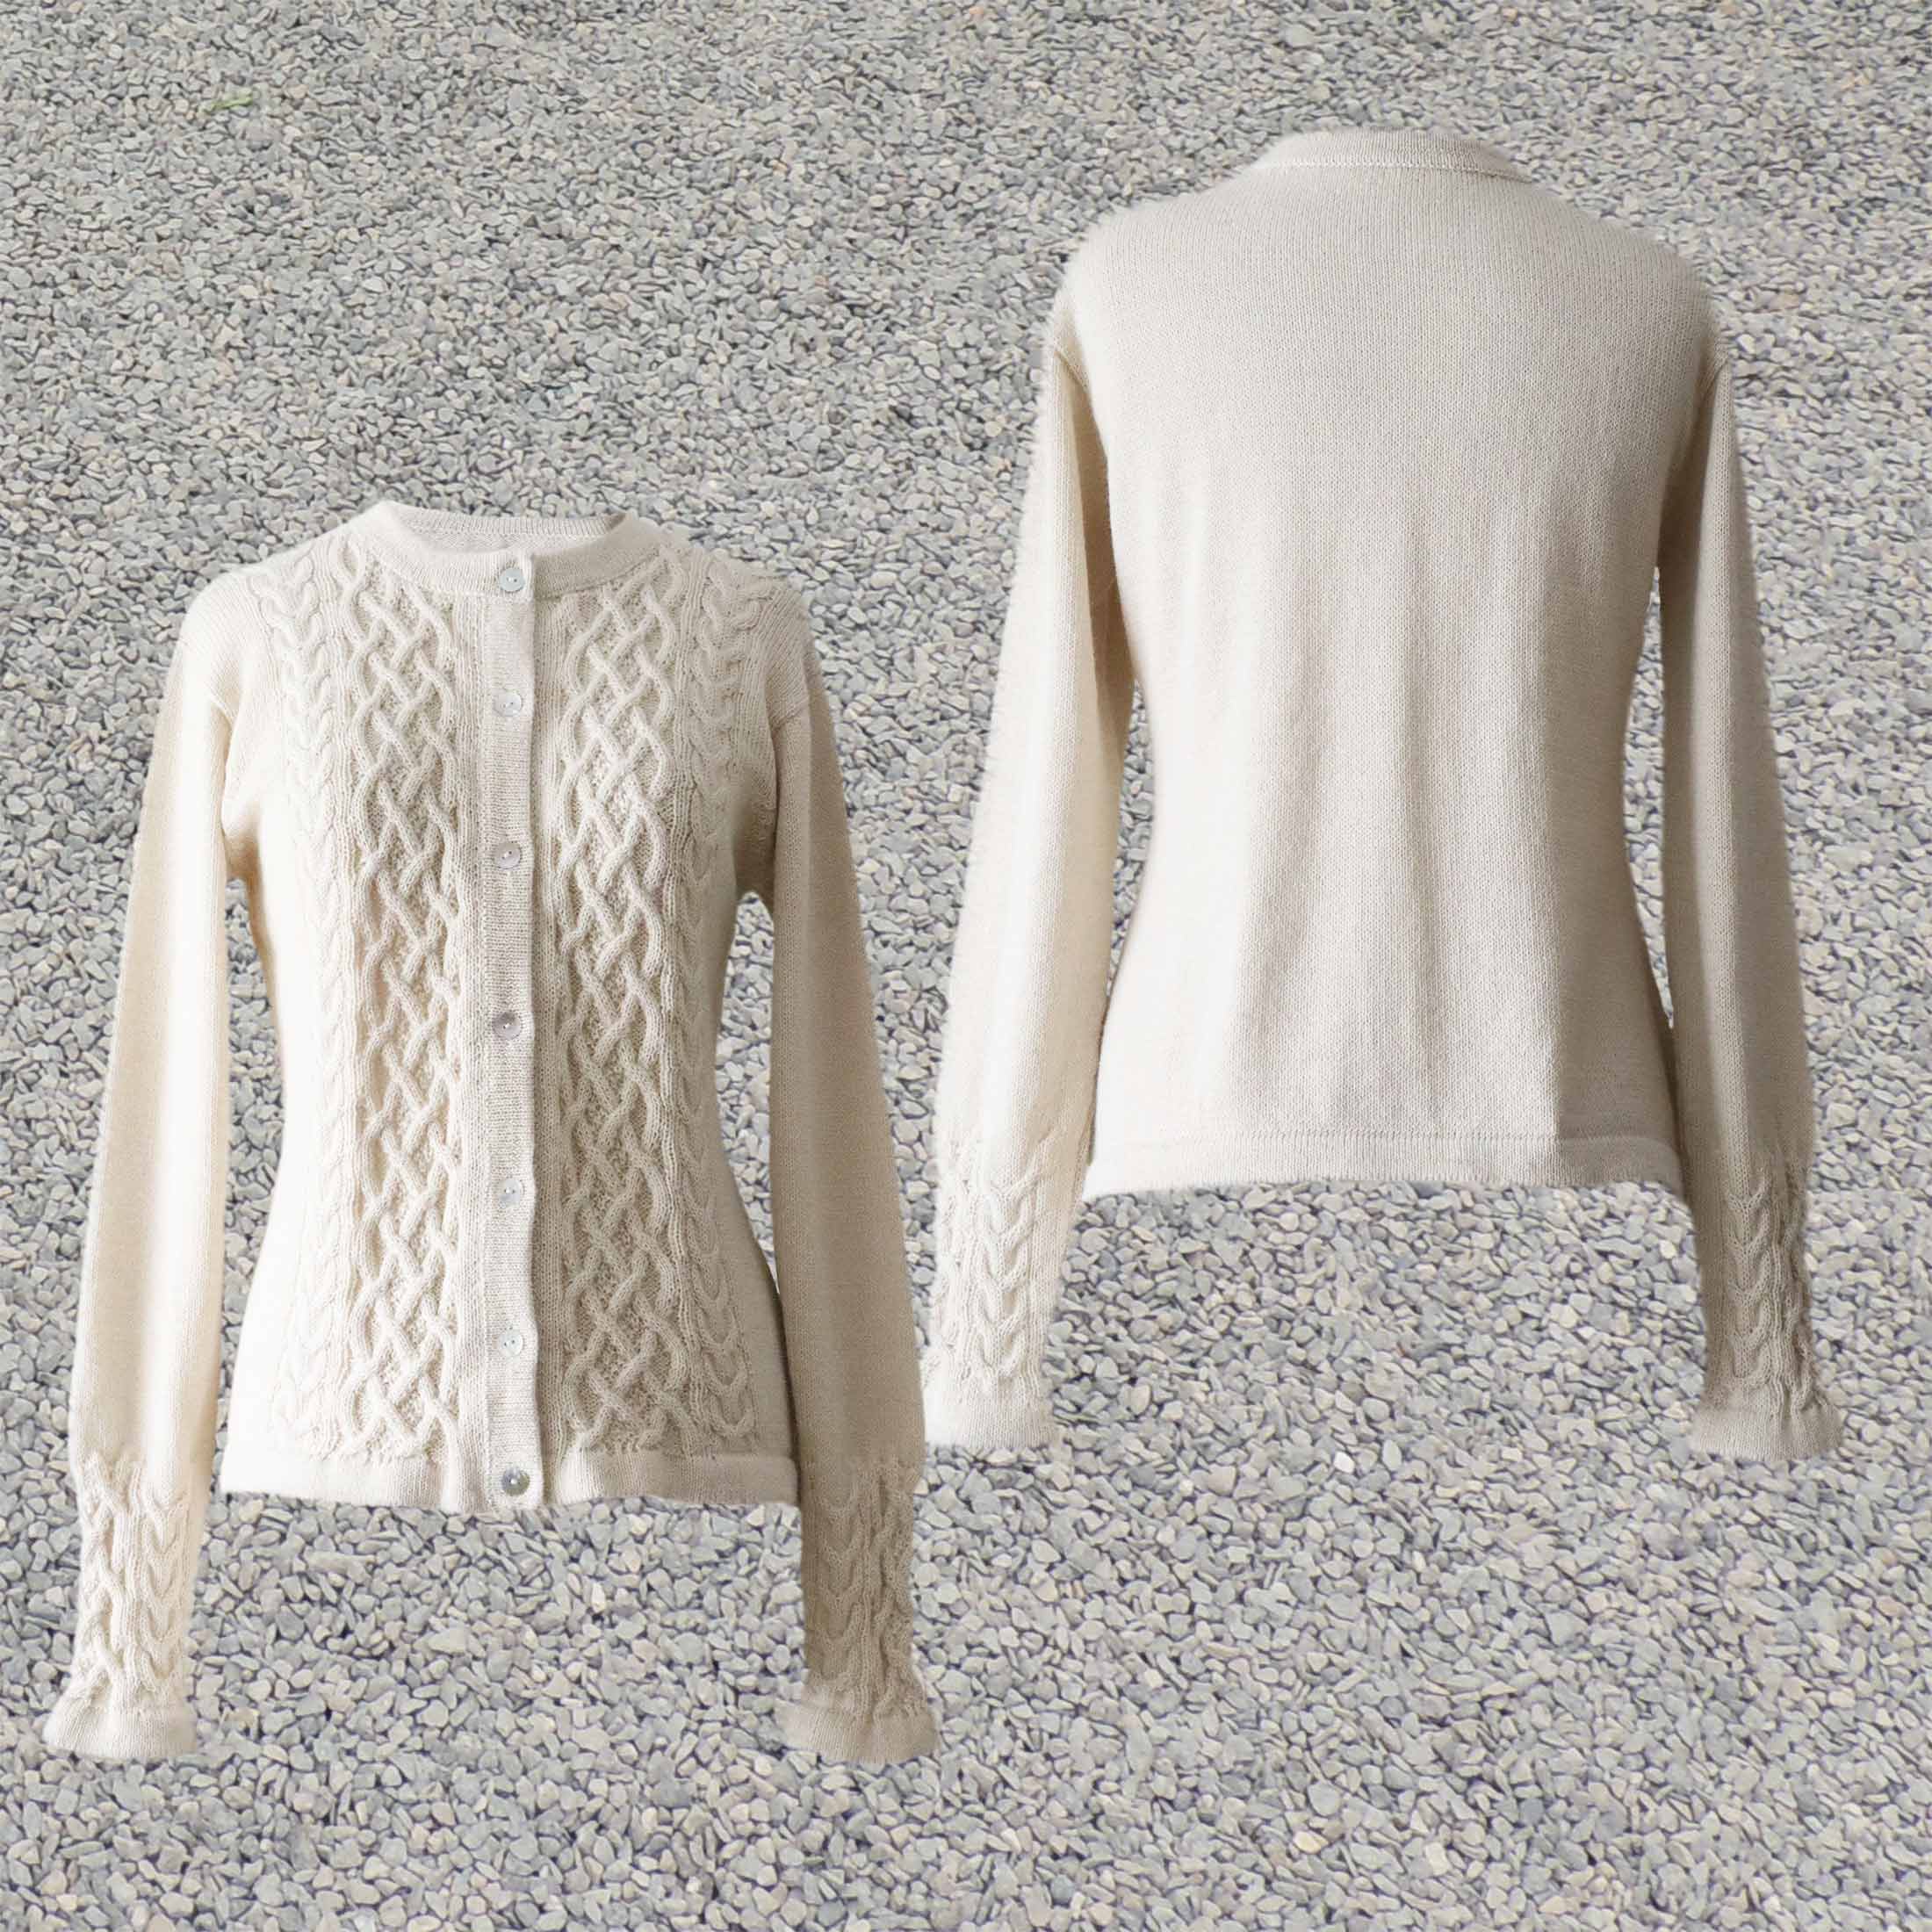 PFL- knitwear Women's cardigan "Angee" 100% baby alpaca, color creme white. women's alpaca sweater.